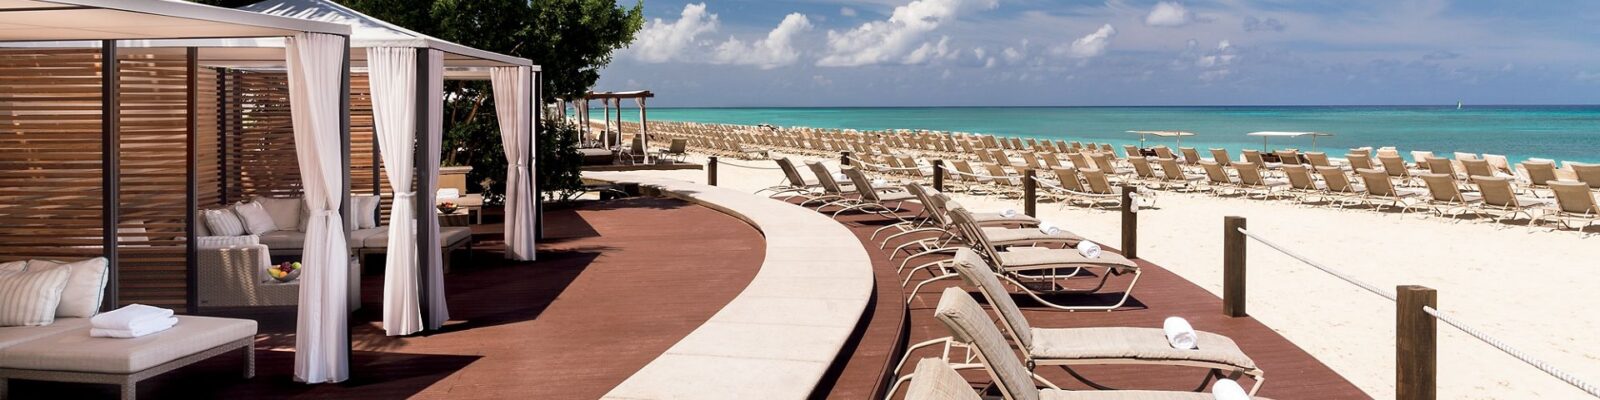 Ritz Grand Cayman